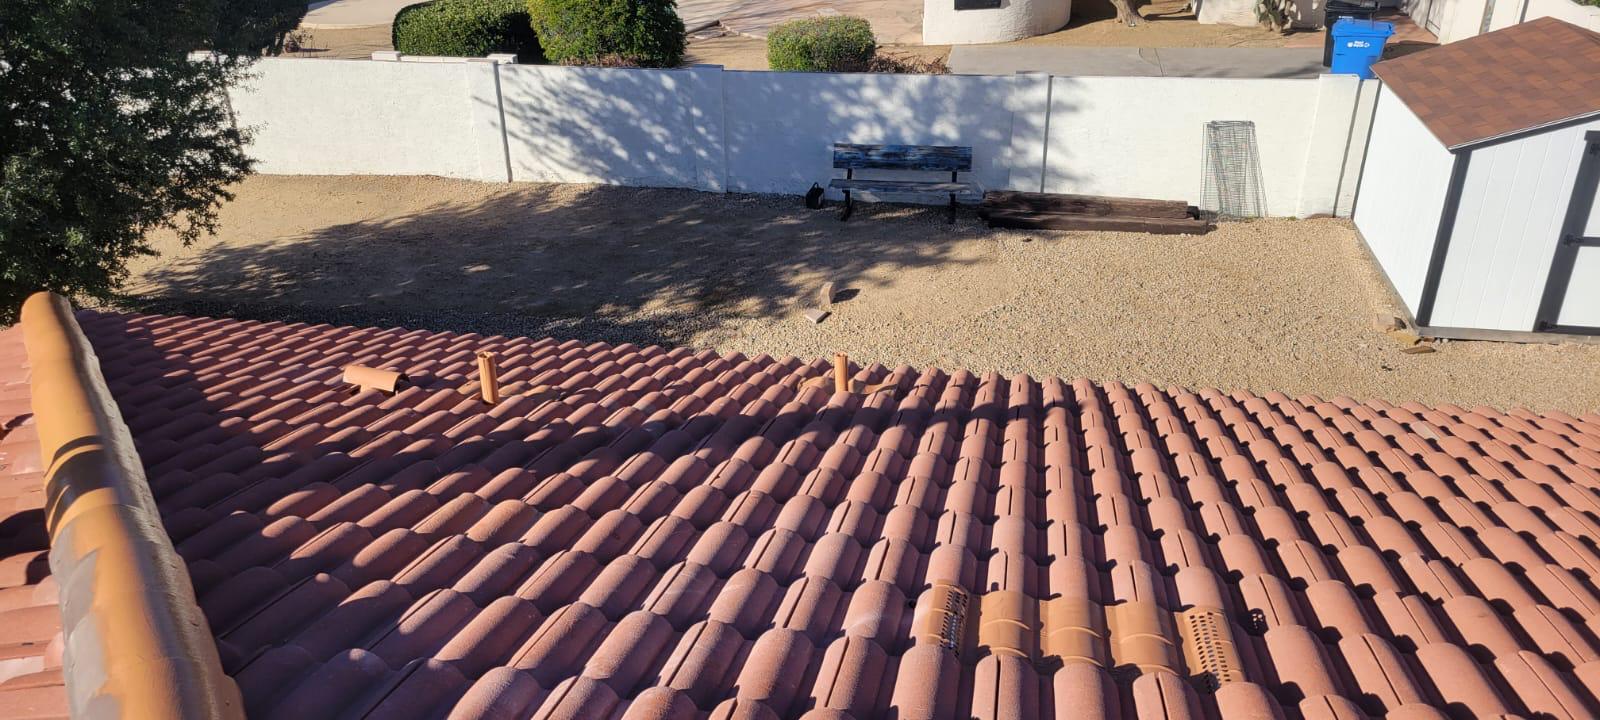 Methodical tile re-felt process by Behmer showcased in a Desert Ridge neighborhood.